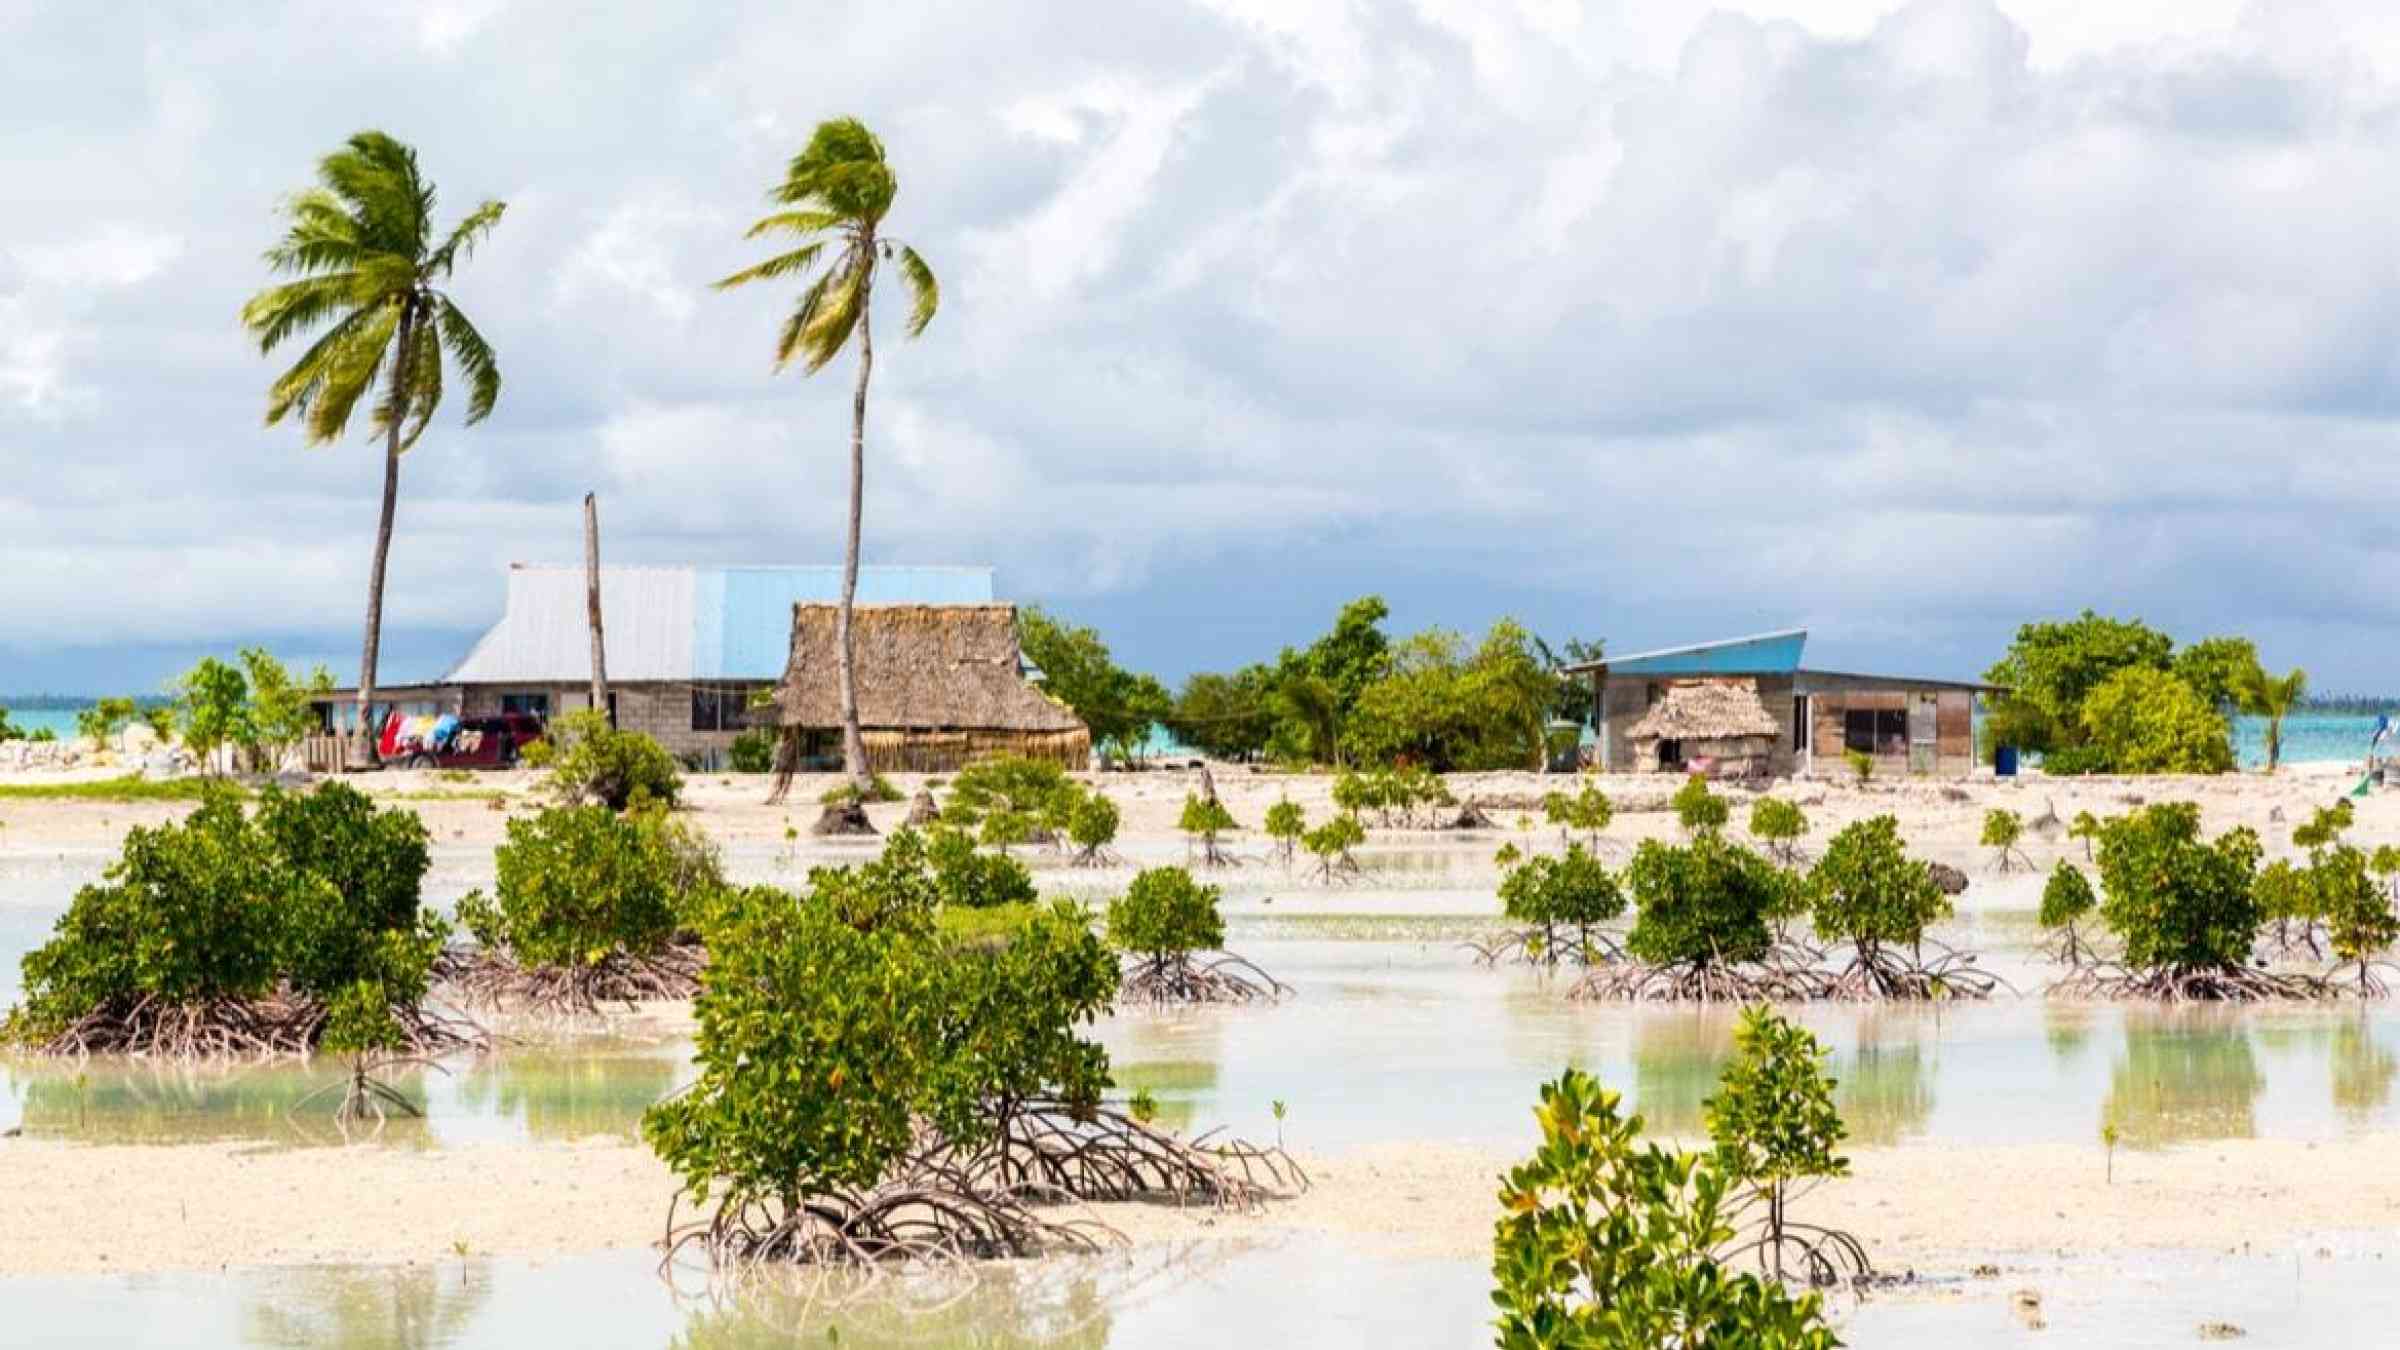 A settlement on the Kiribati mangrove coastline